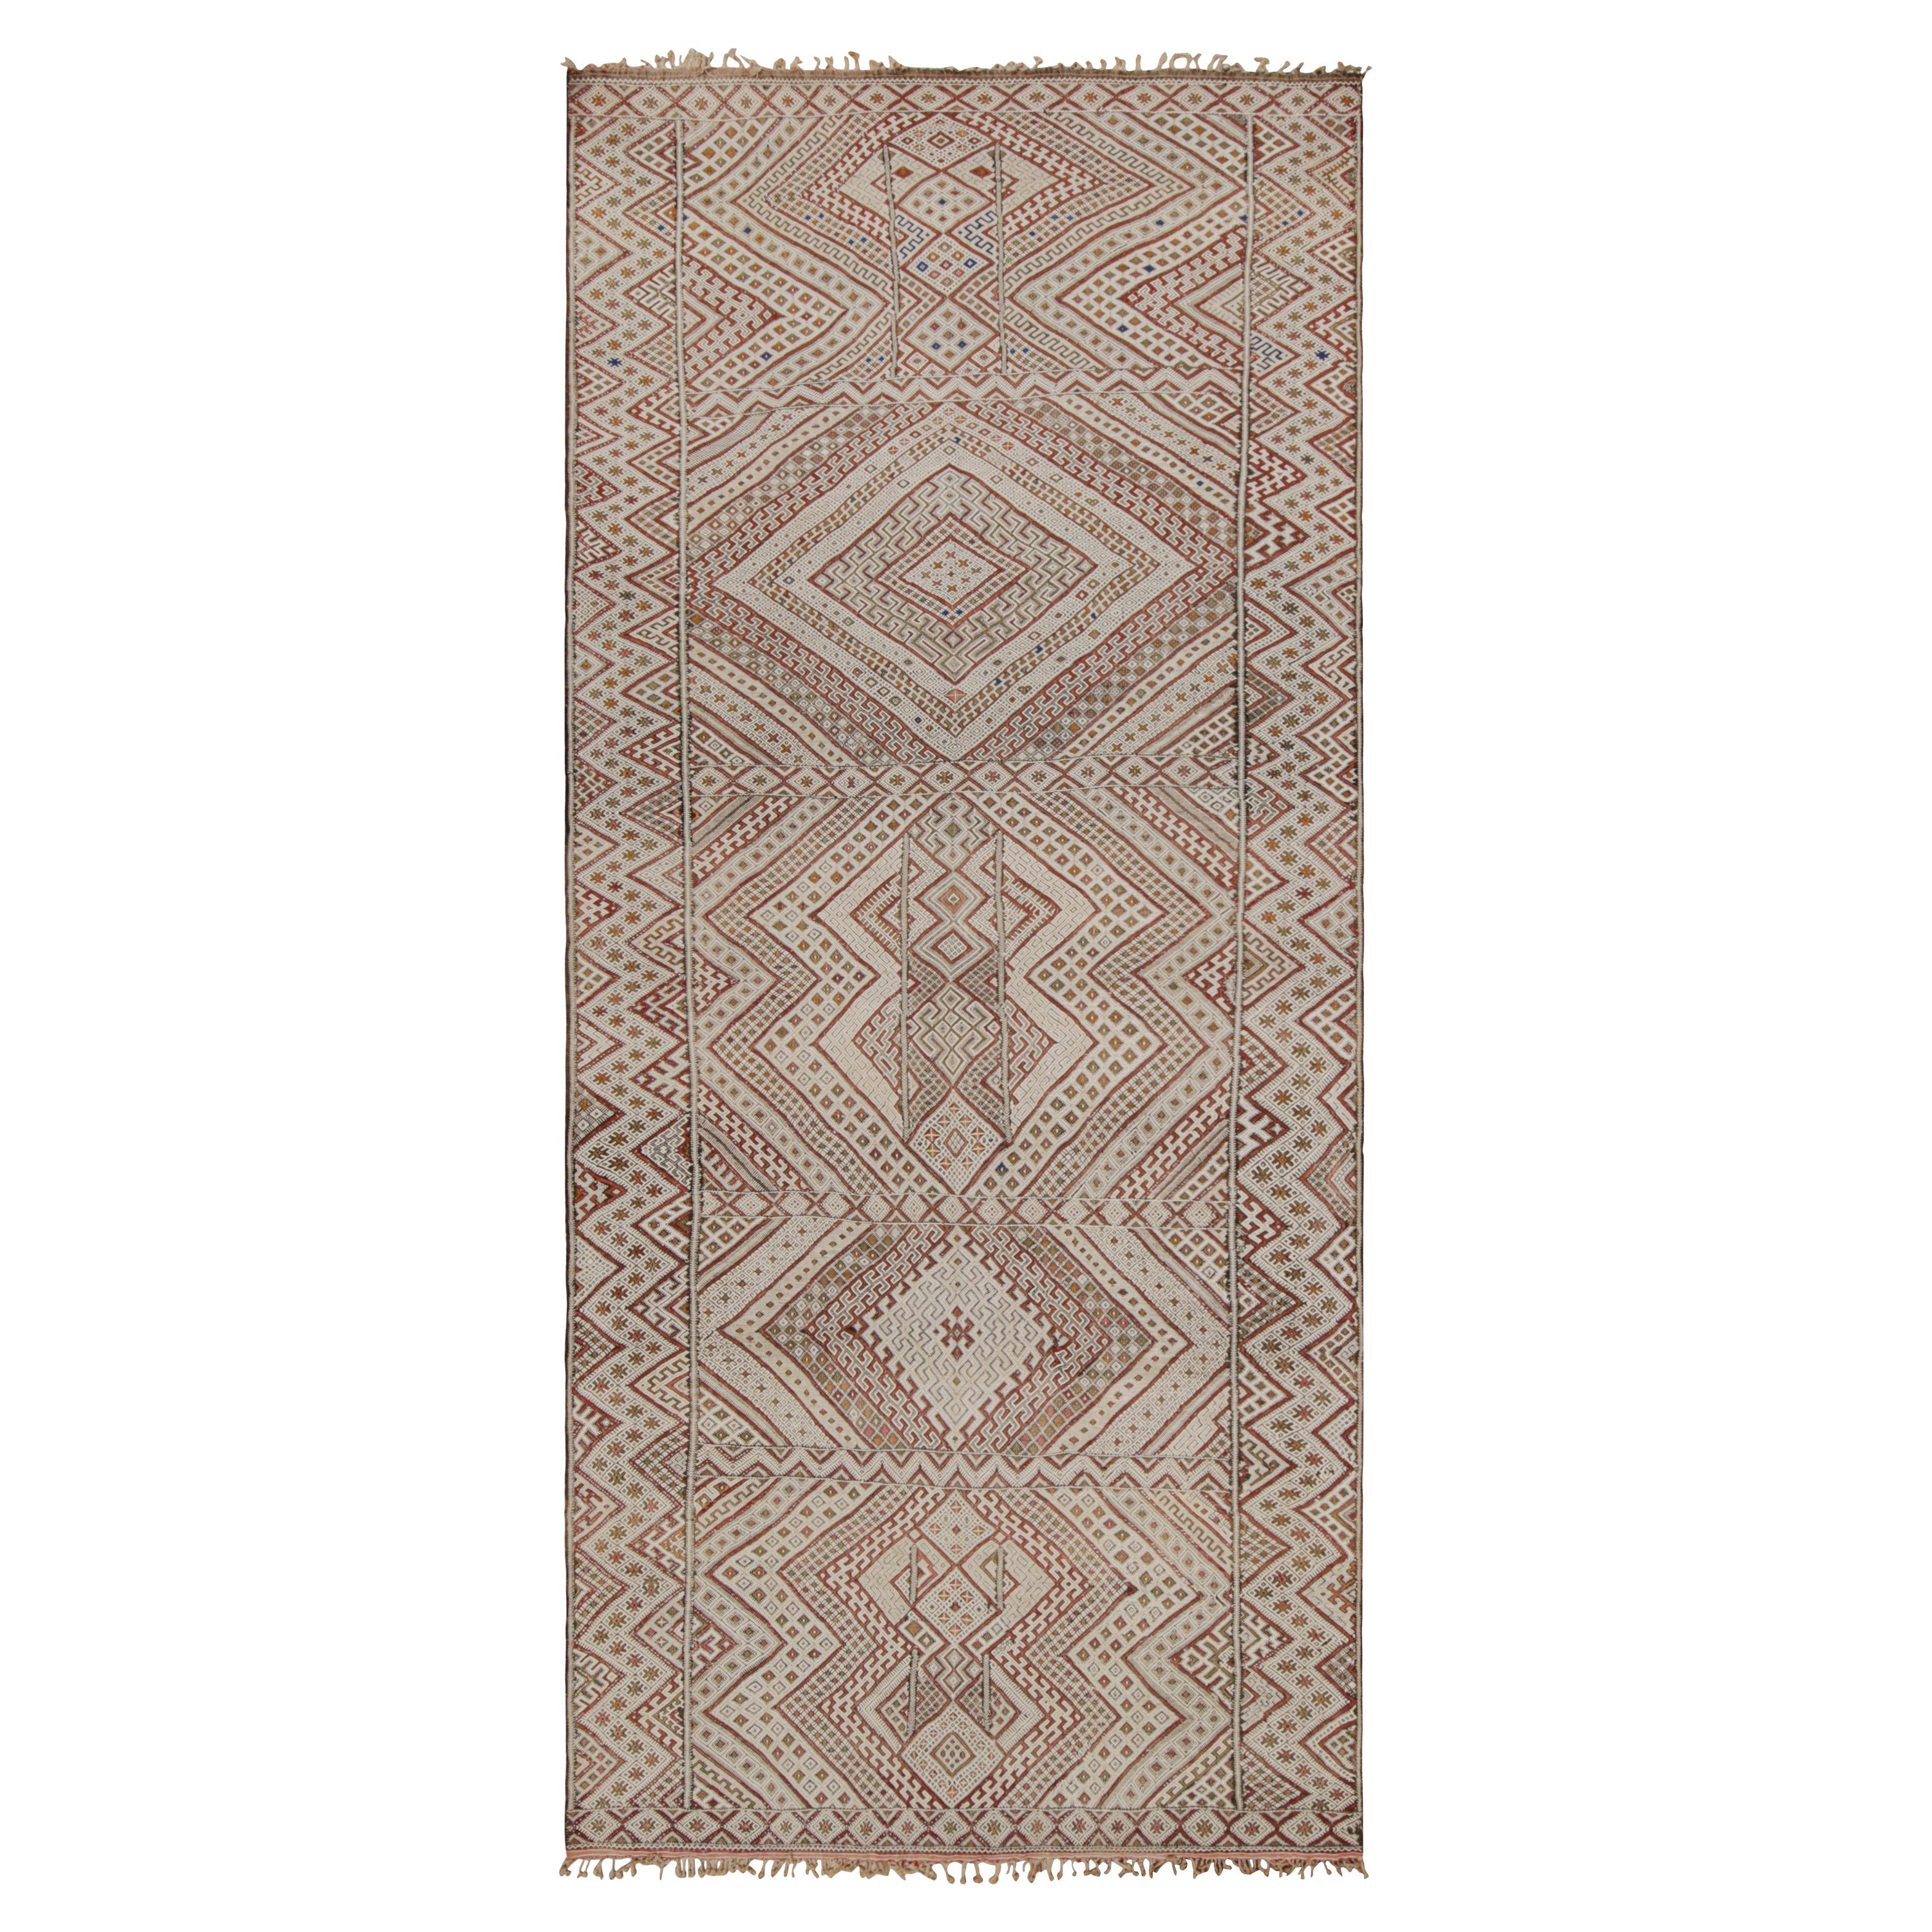 Vintage Zayane Moroccan Kilim in White & Brown Tribal Patterns by Rug & Kilim For Sale